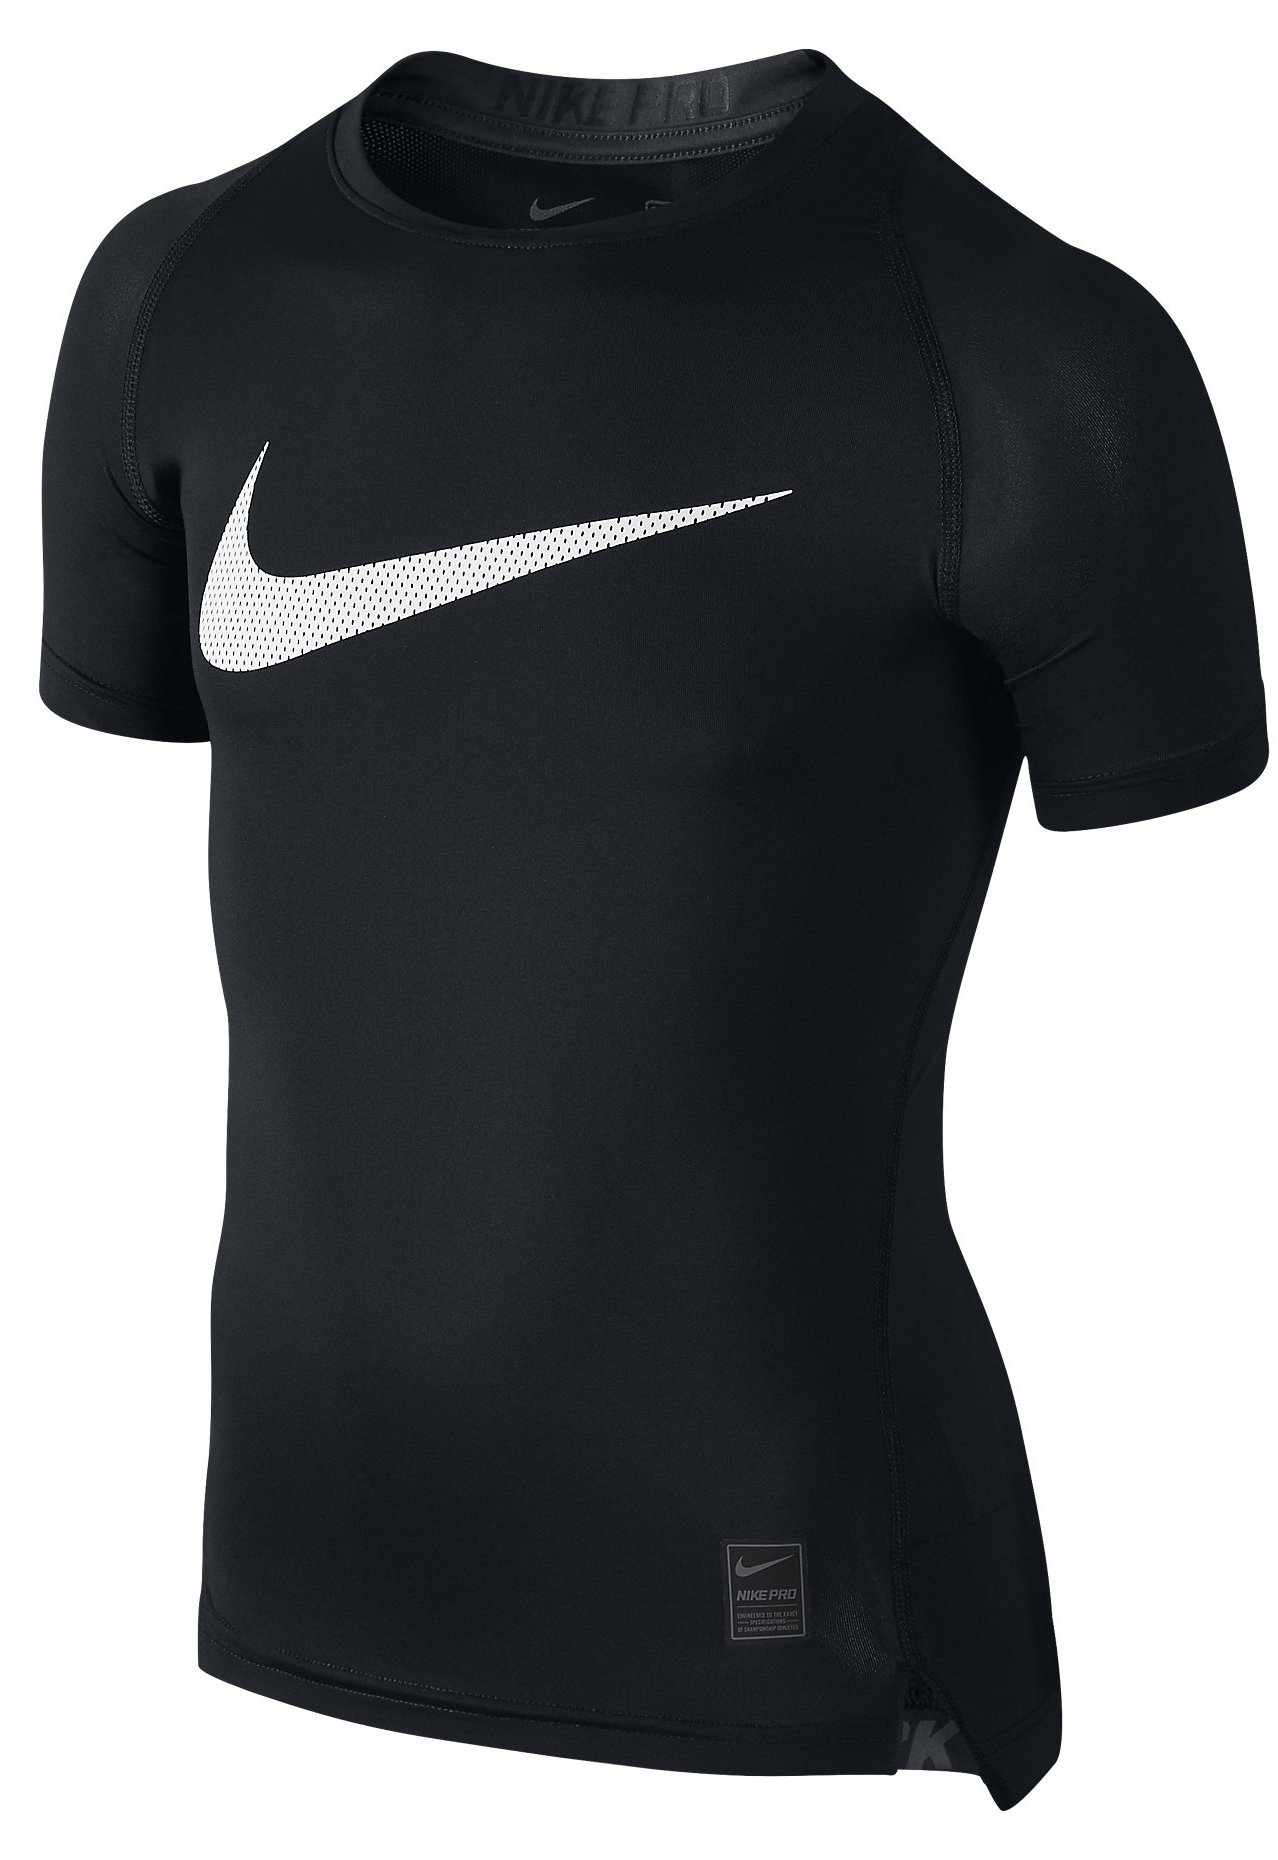 Kompresné tričko Nike COOL HBR COMP SS YTH